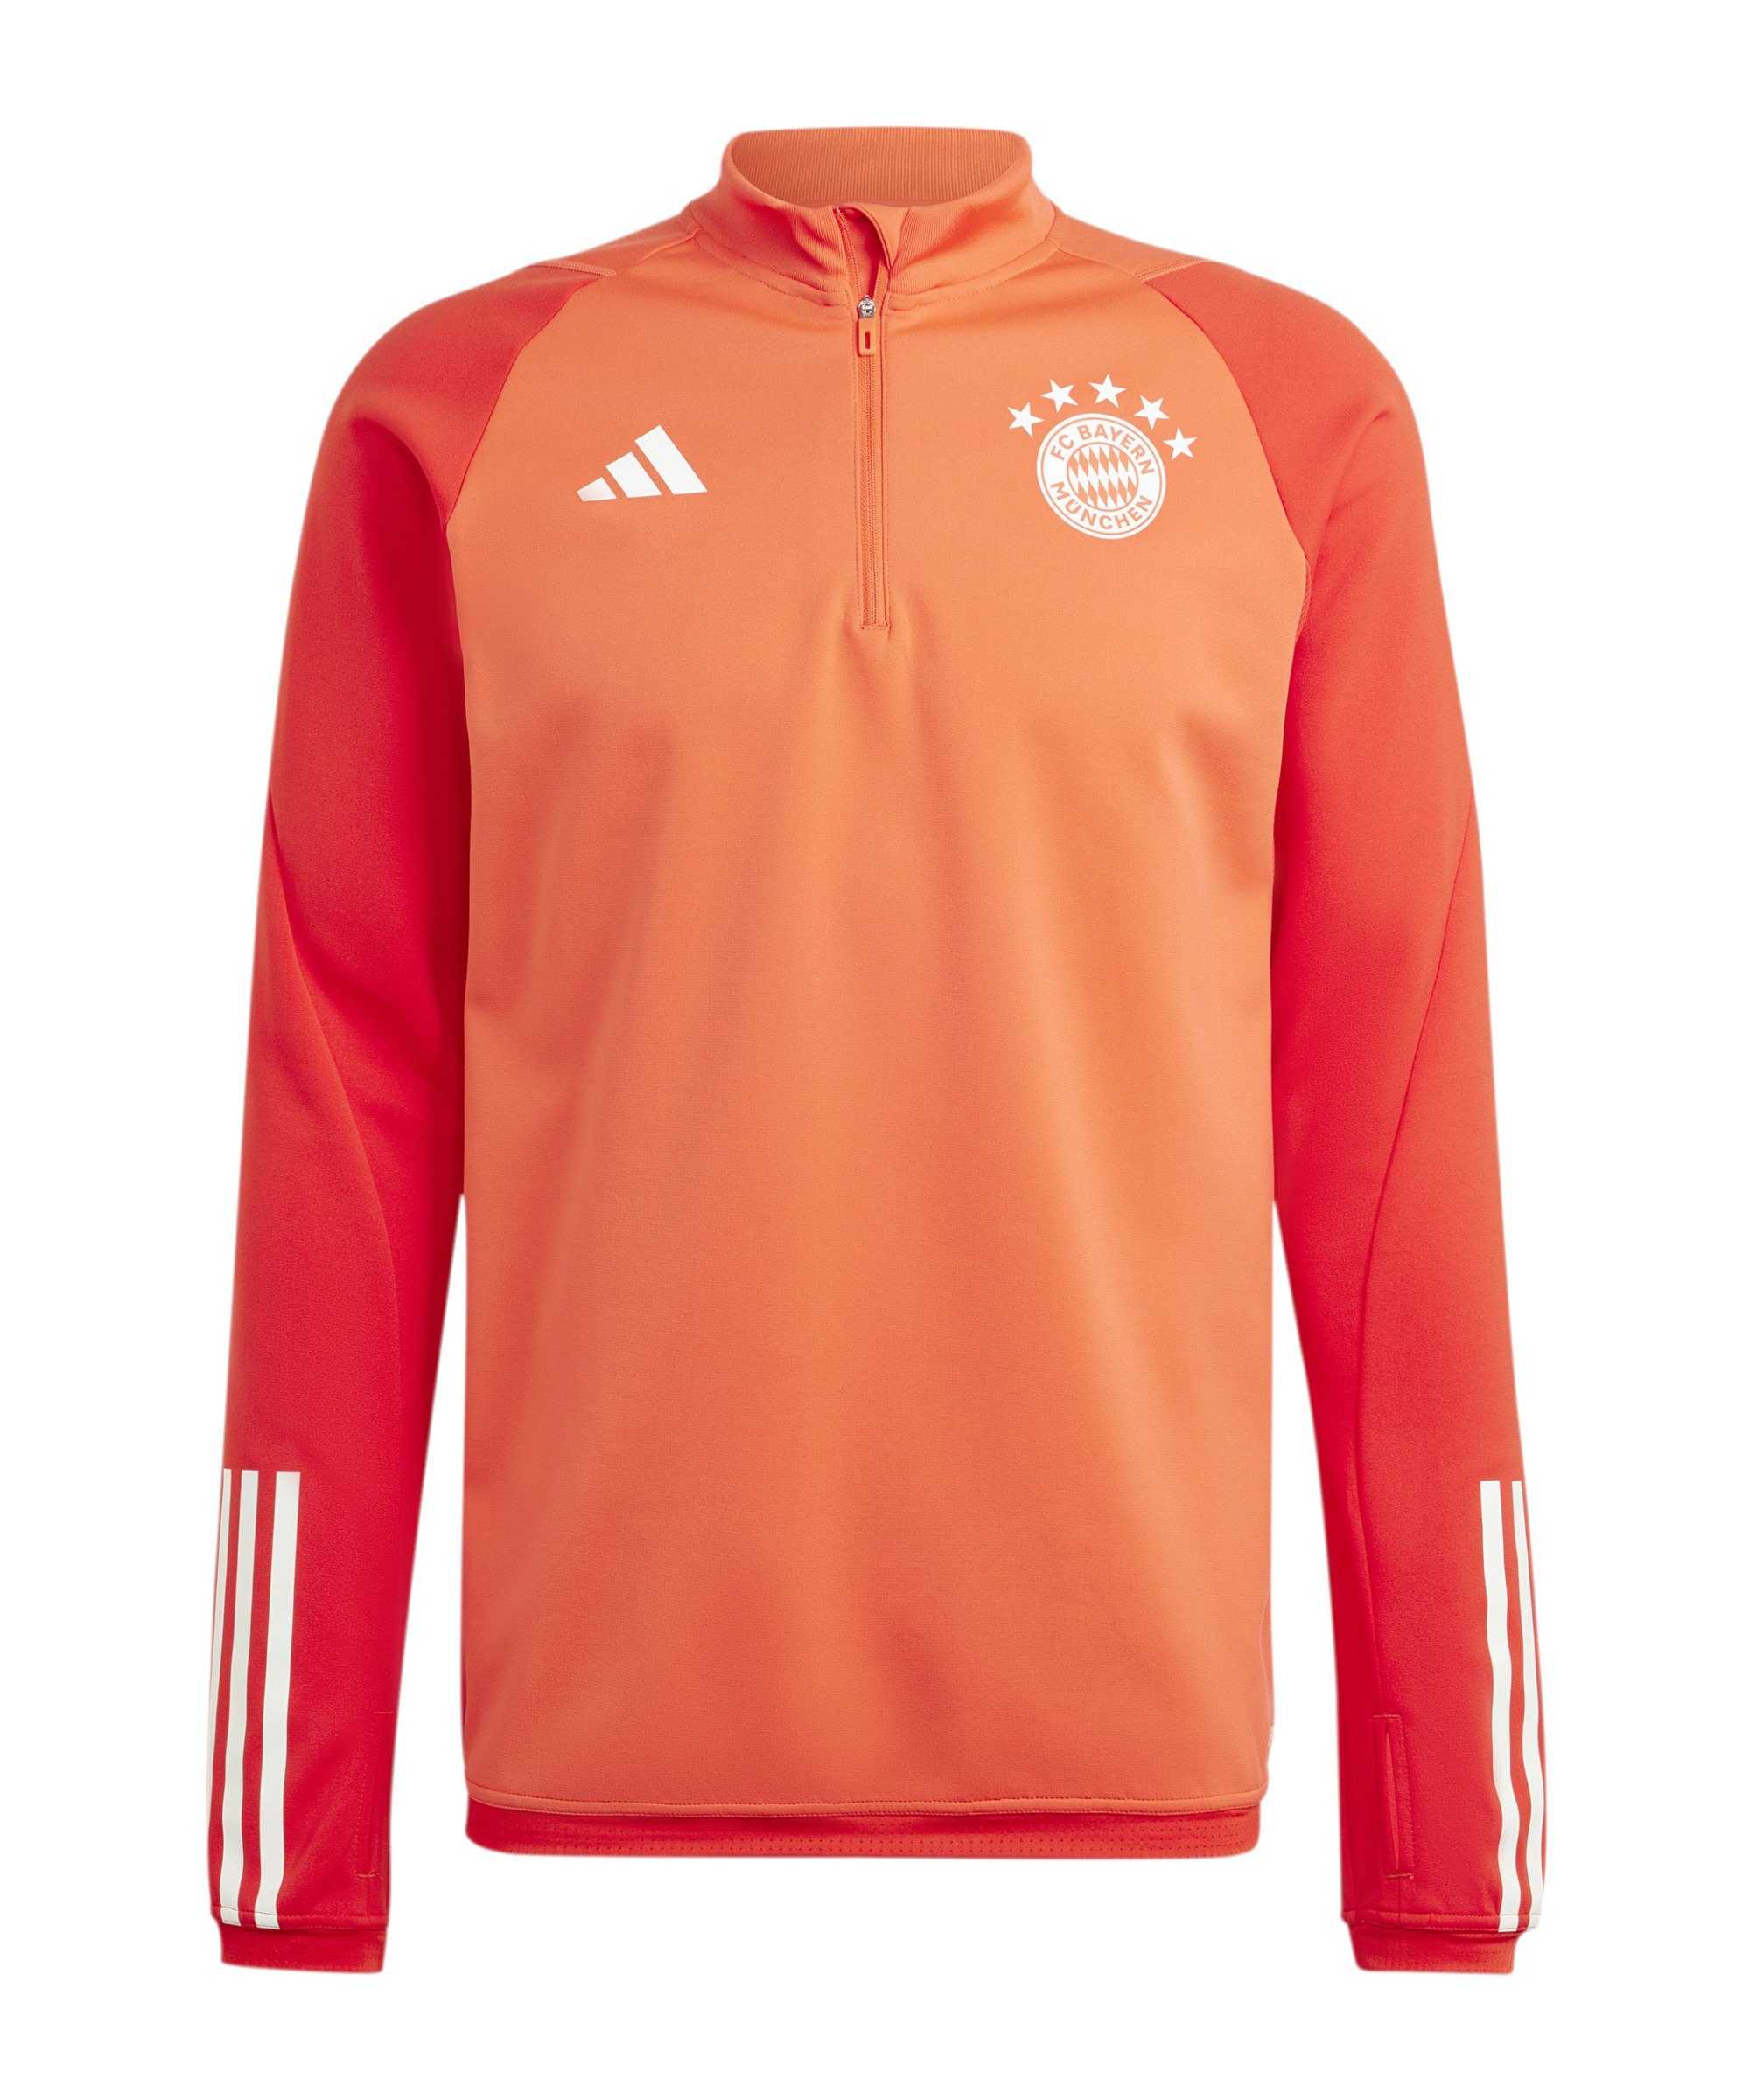 adidas Performance Sweatshirt FC Bayern München Trainingstop